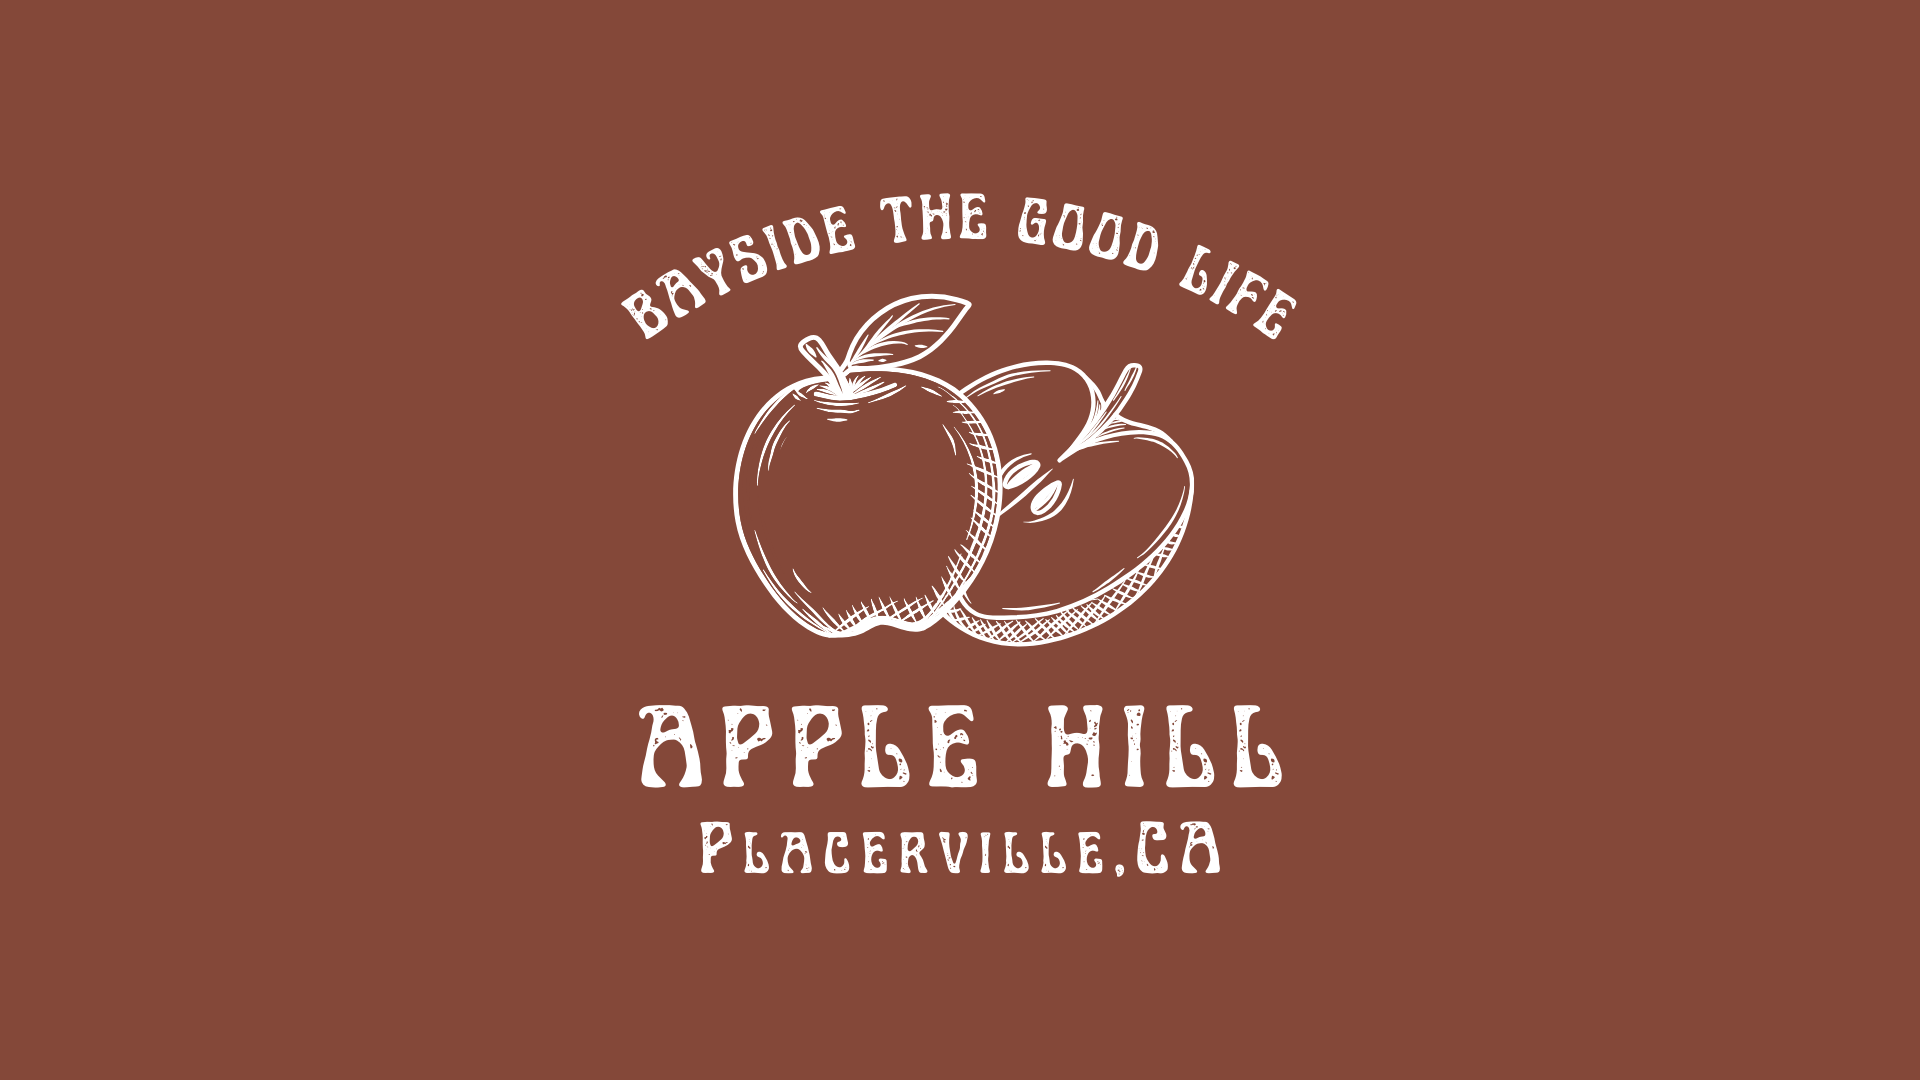 The Good Life 55+ | Apple Hill